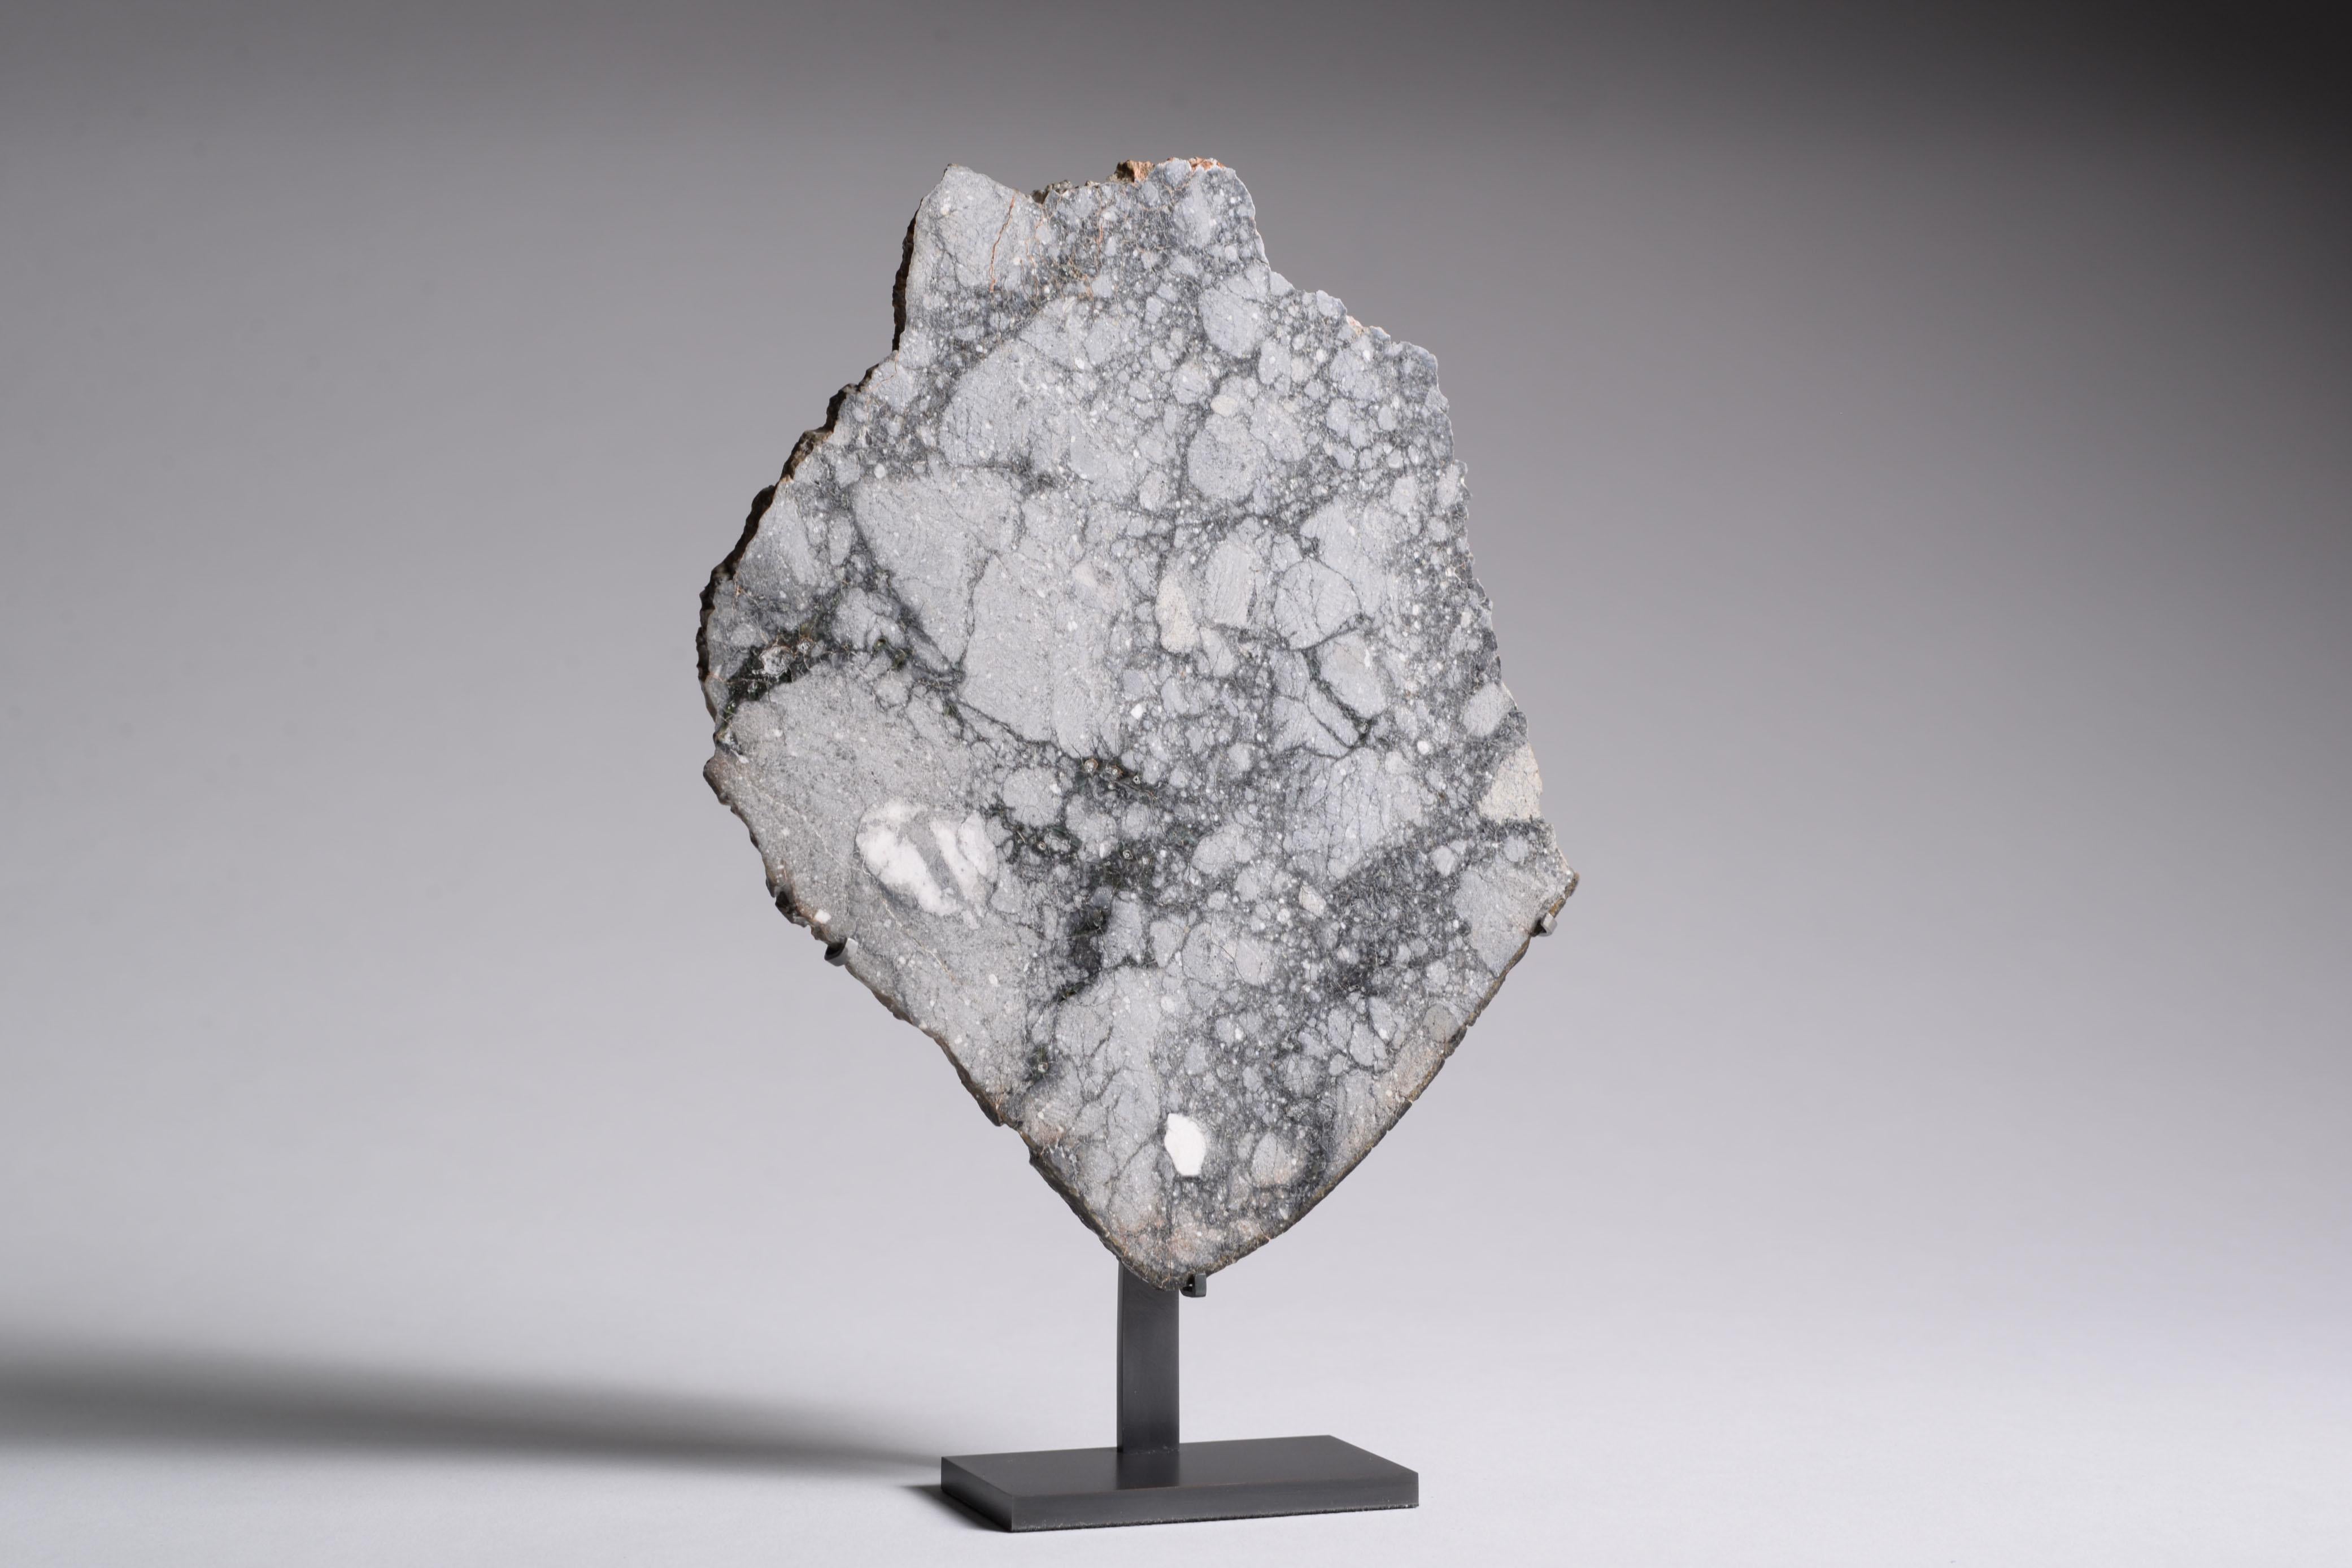 lunar meteorite price